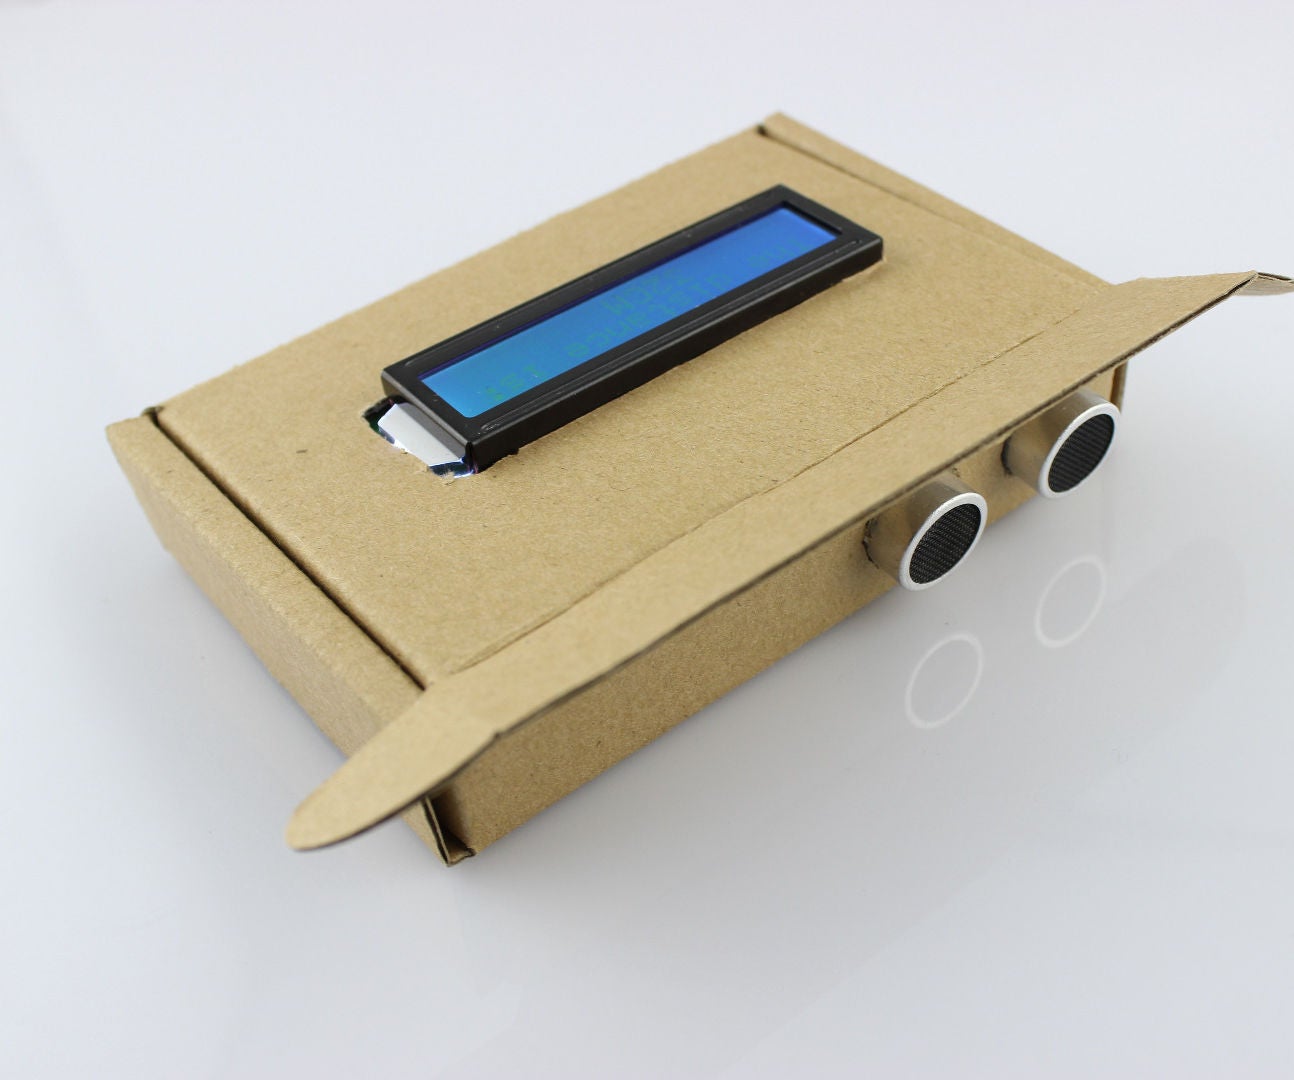 A Mysterious Box- Ultrasonic Range Finder(Arduino)